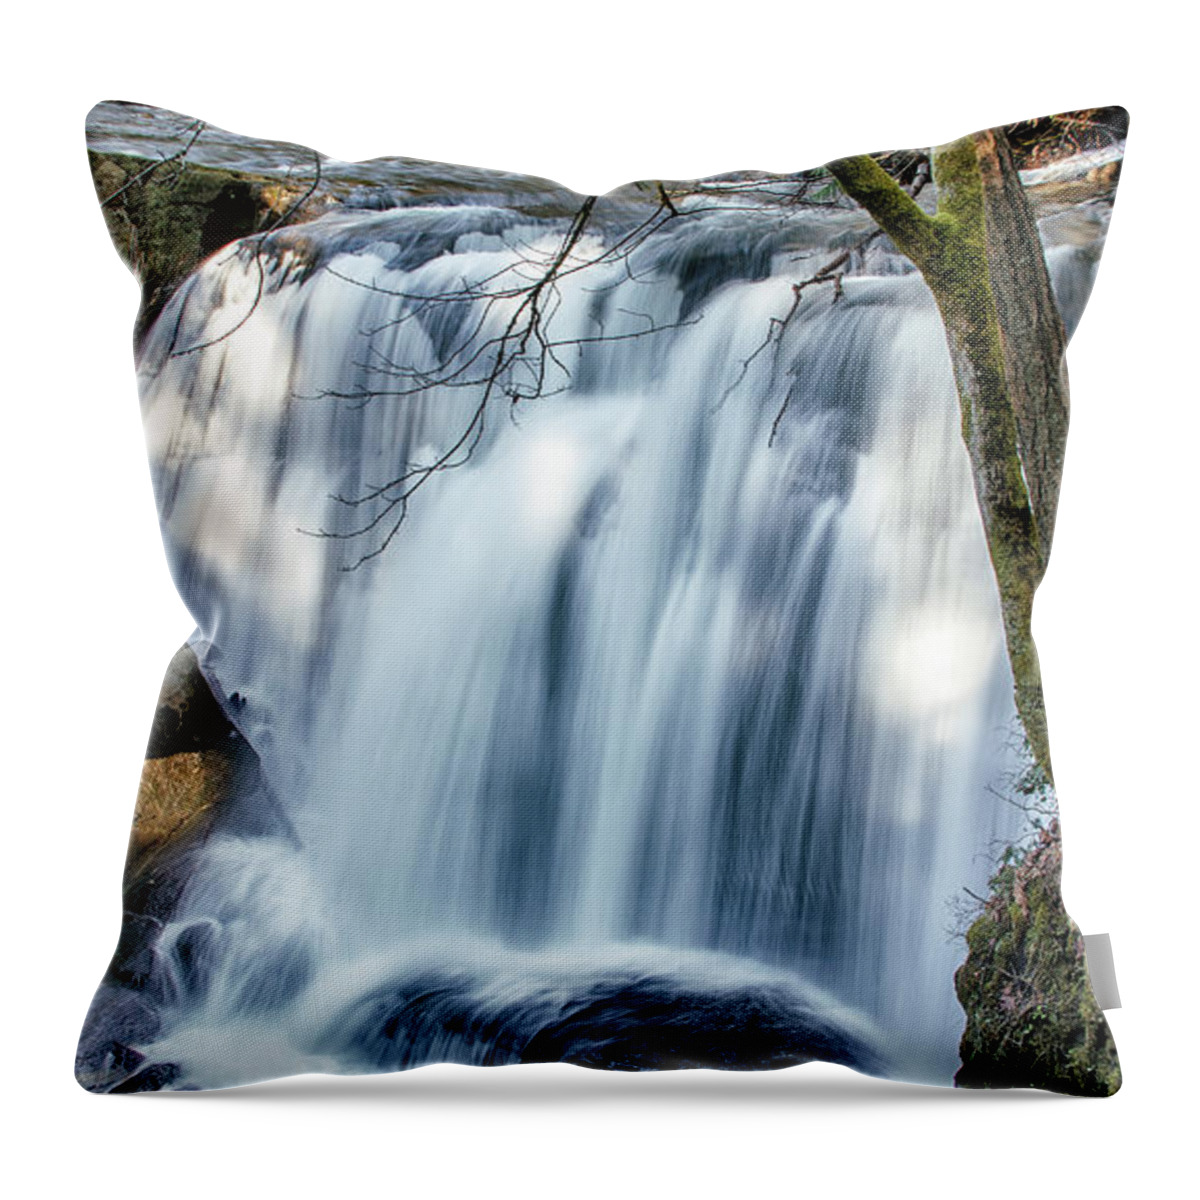 Whatcom Falls Throw Pillow featuring the photograph Whatcom Falls by Tony Locke